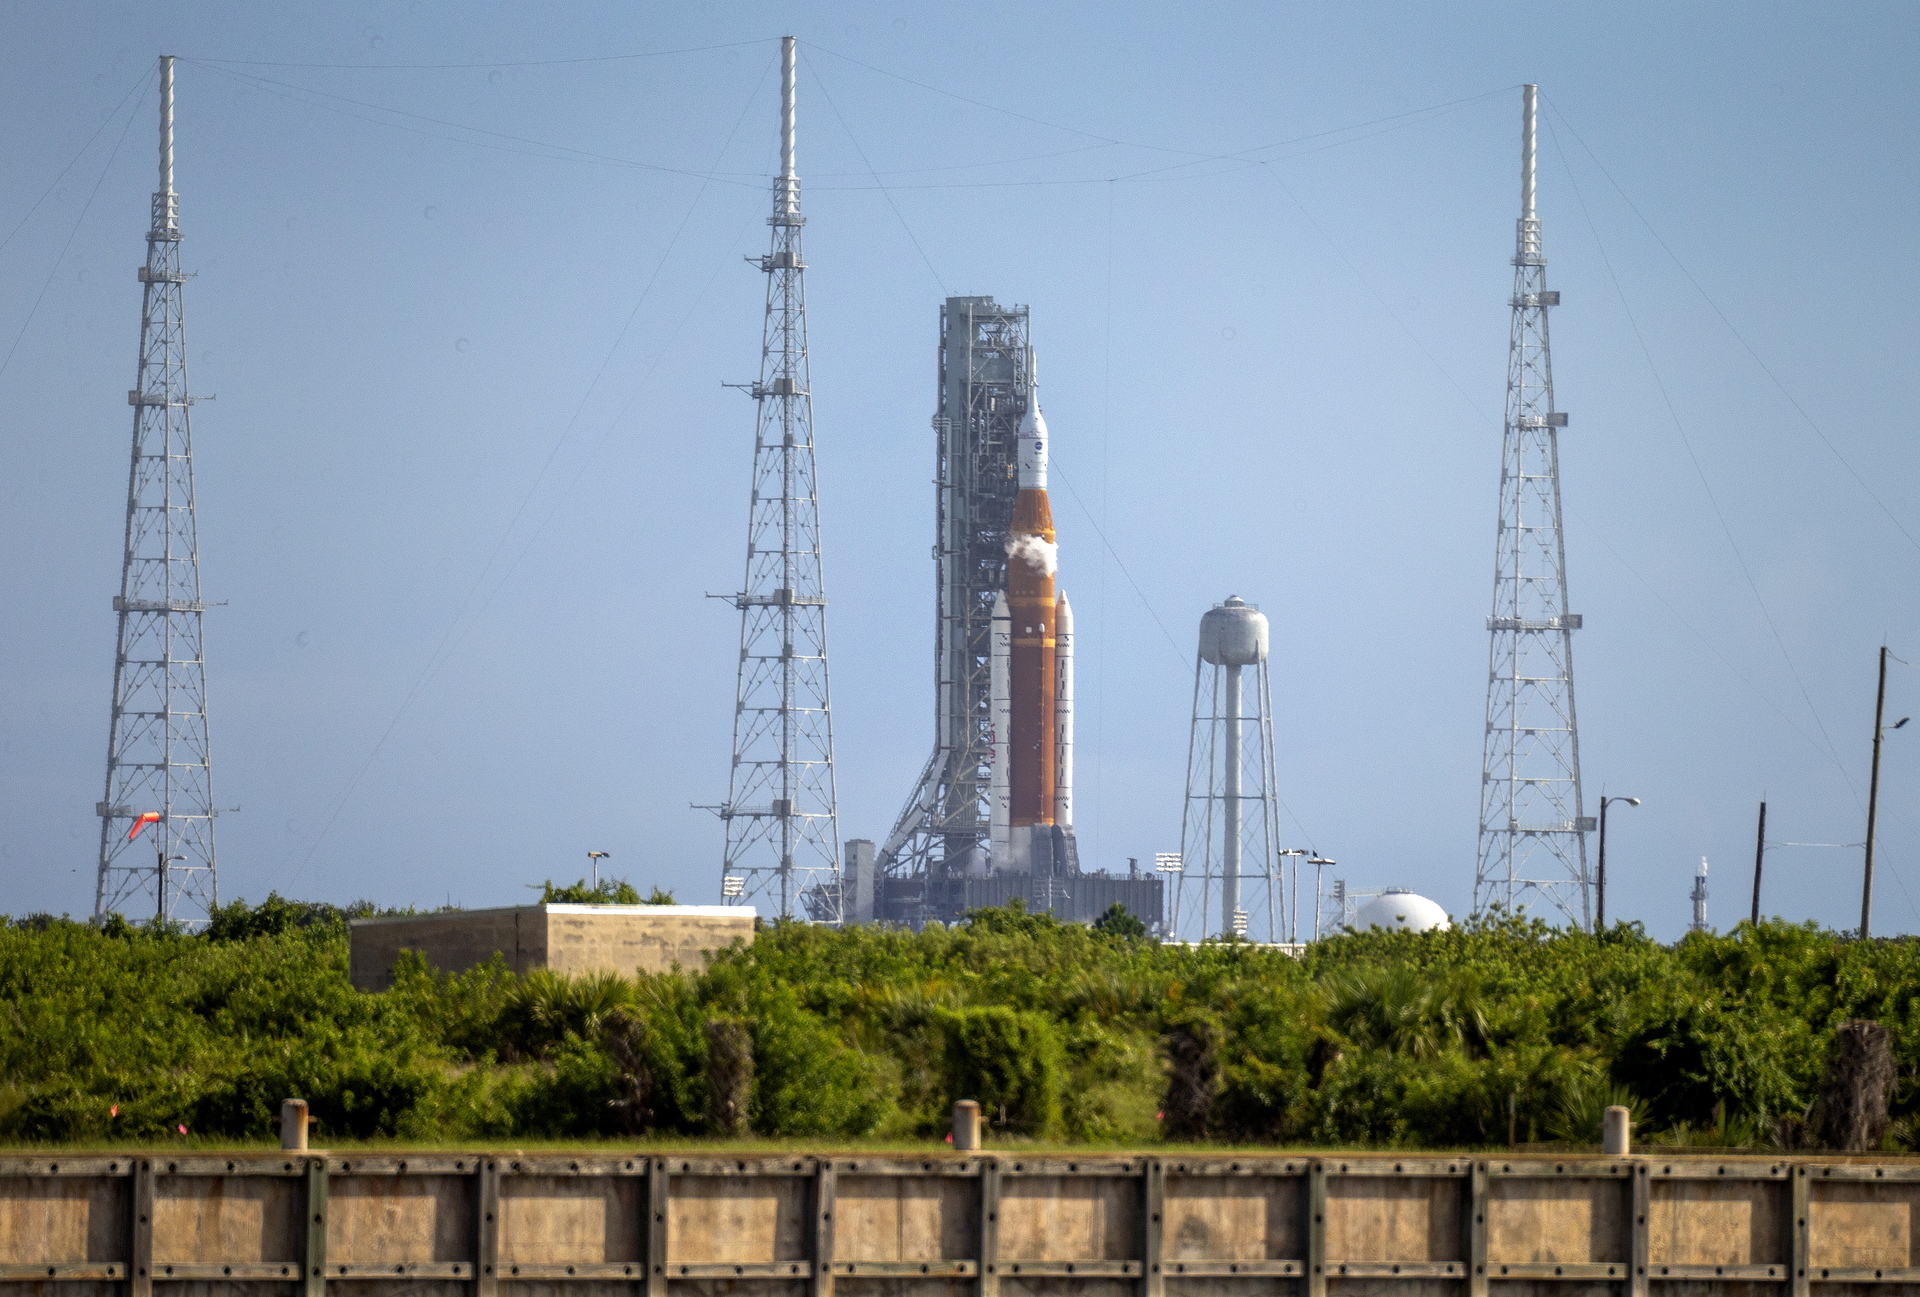 La NASA probará 'reparaciones' al cohete SLS antes del despegue de Artemis I